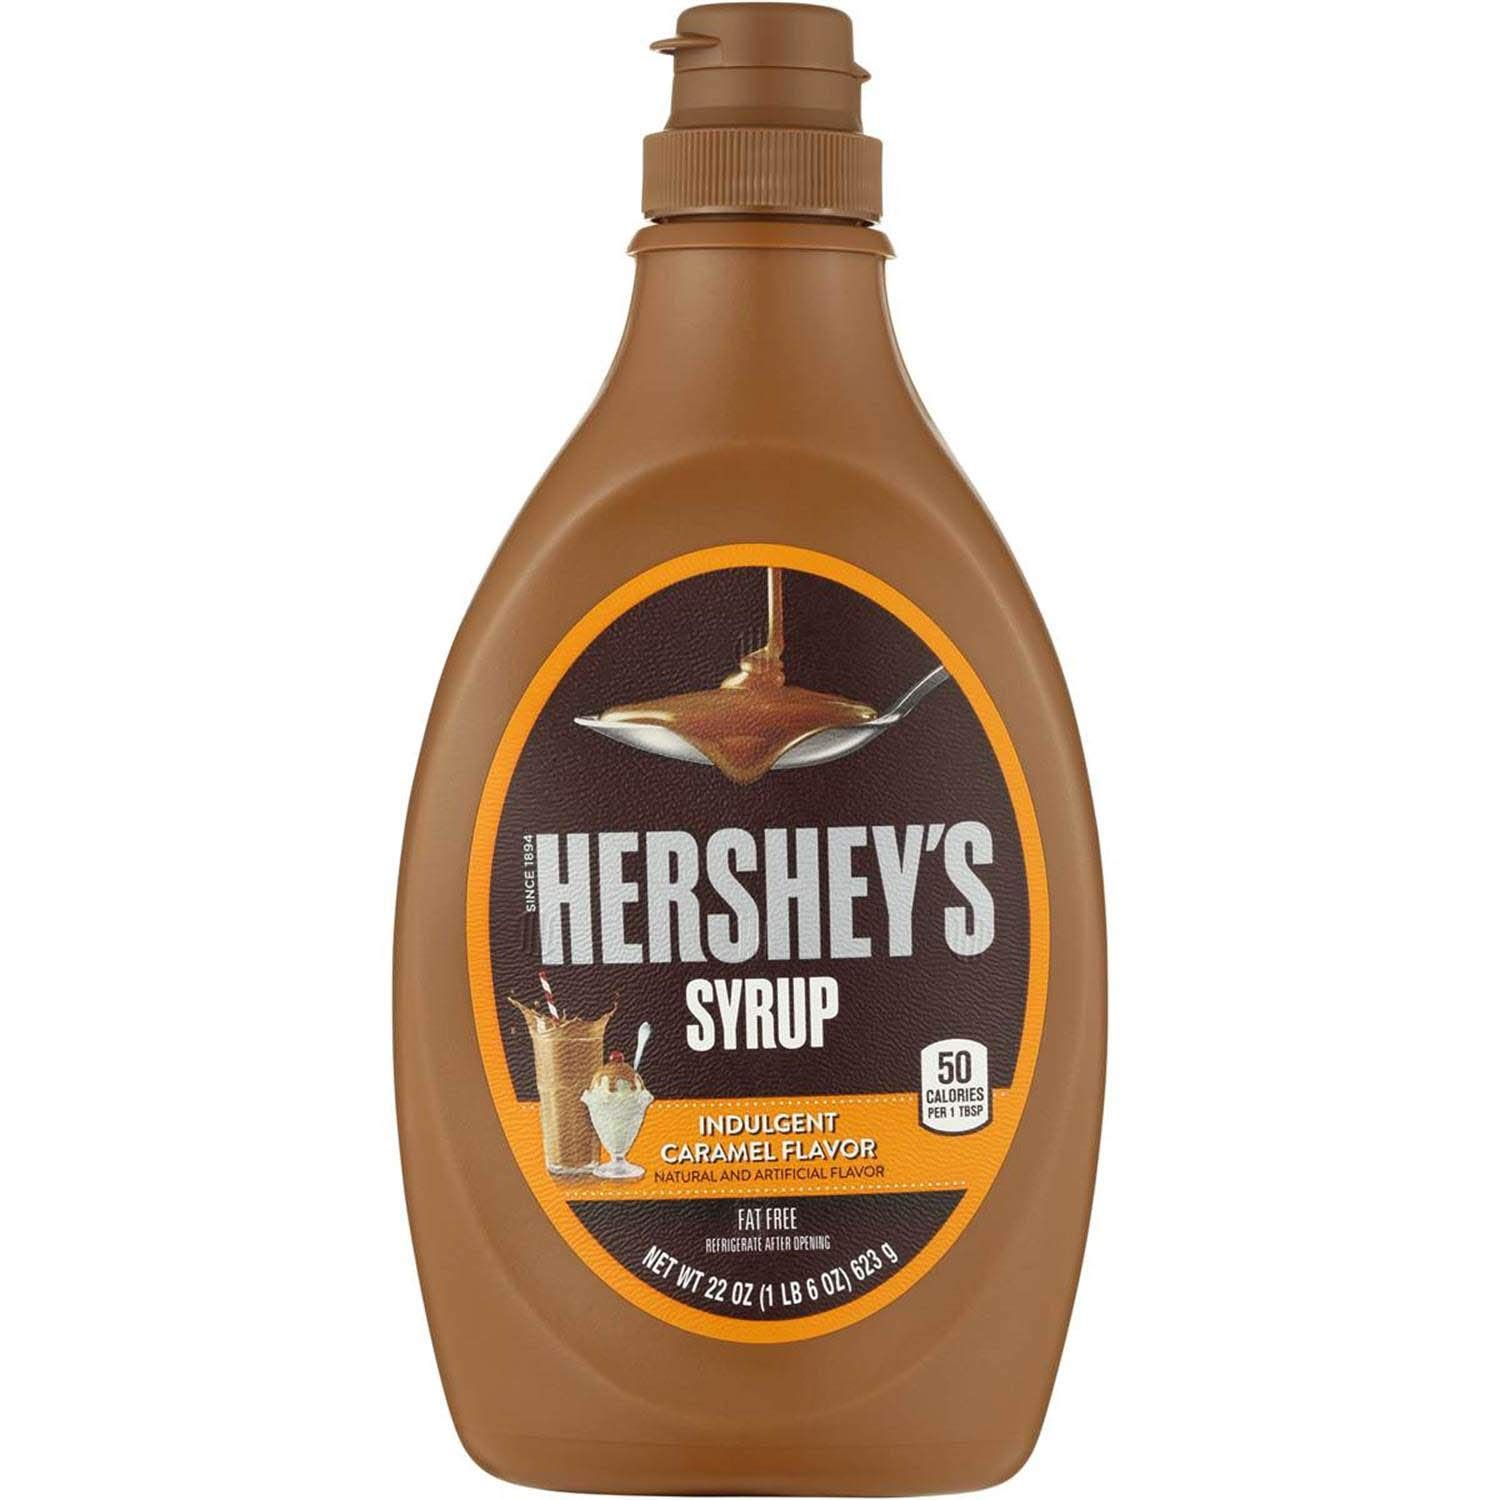 Hershey's Syrup Indulgent Caramel Flavor Image